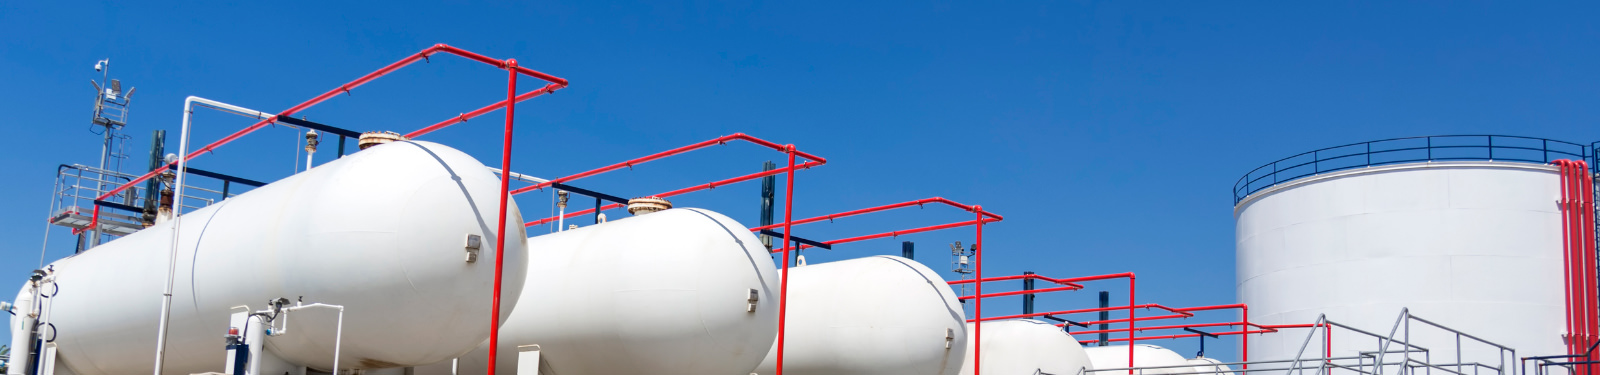 Level Measurement - Industrial Gas Storage & Distribution